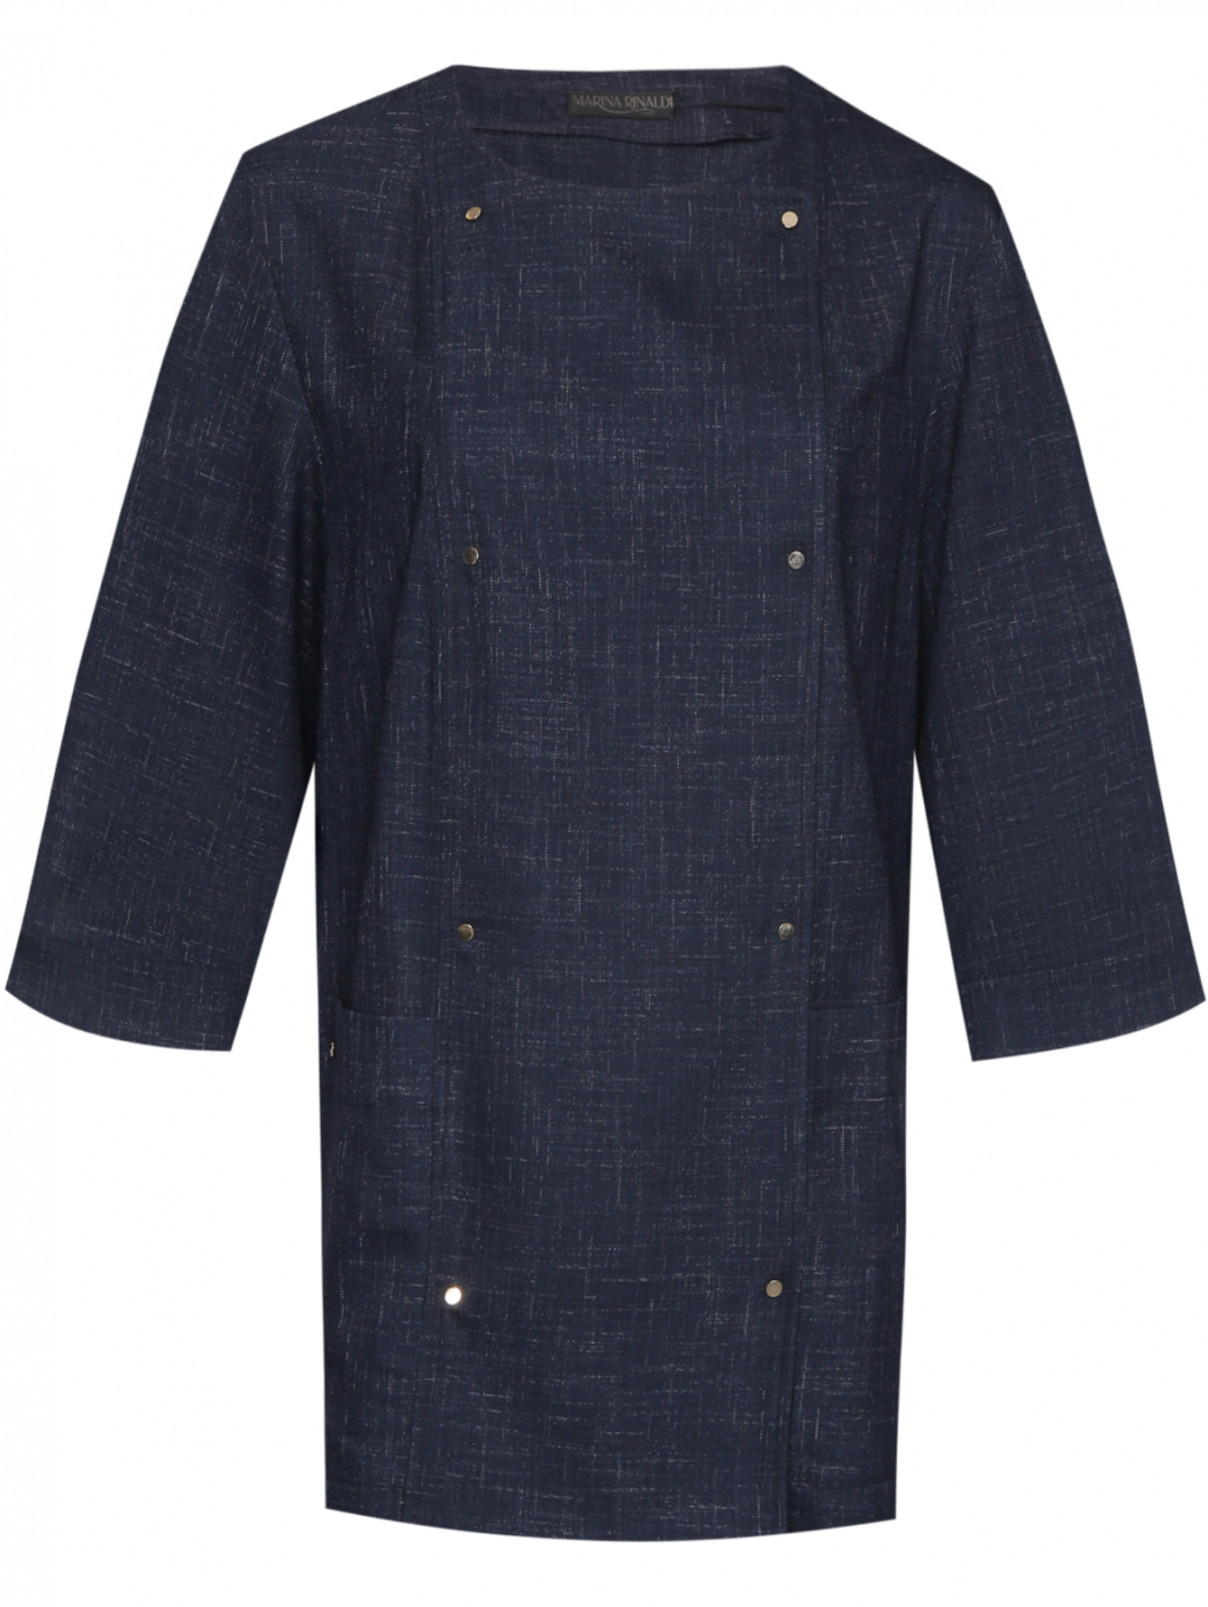 Блуза на кнопках с карманами Marina Rinaldi  –  Общий вид  – Цвет:  Синий